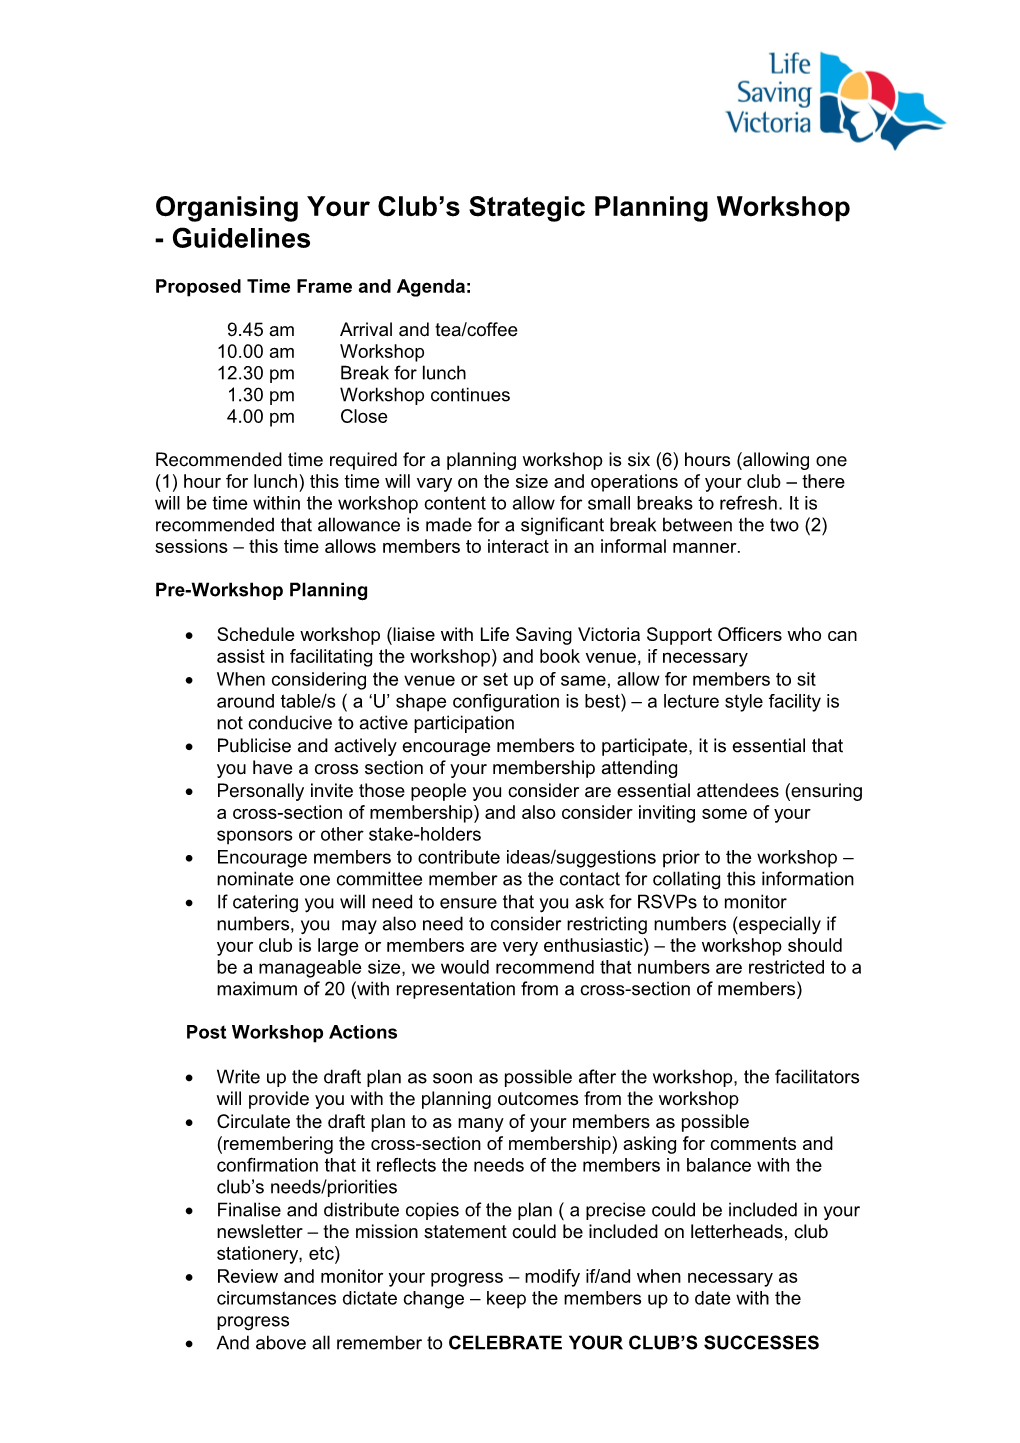 Guidelines for Organising a Strategic Planning Workshop